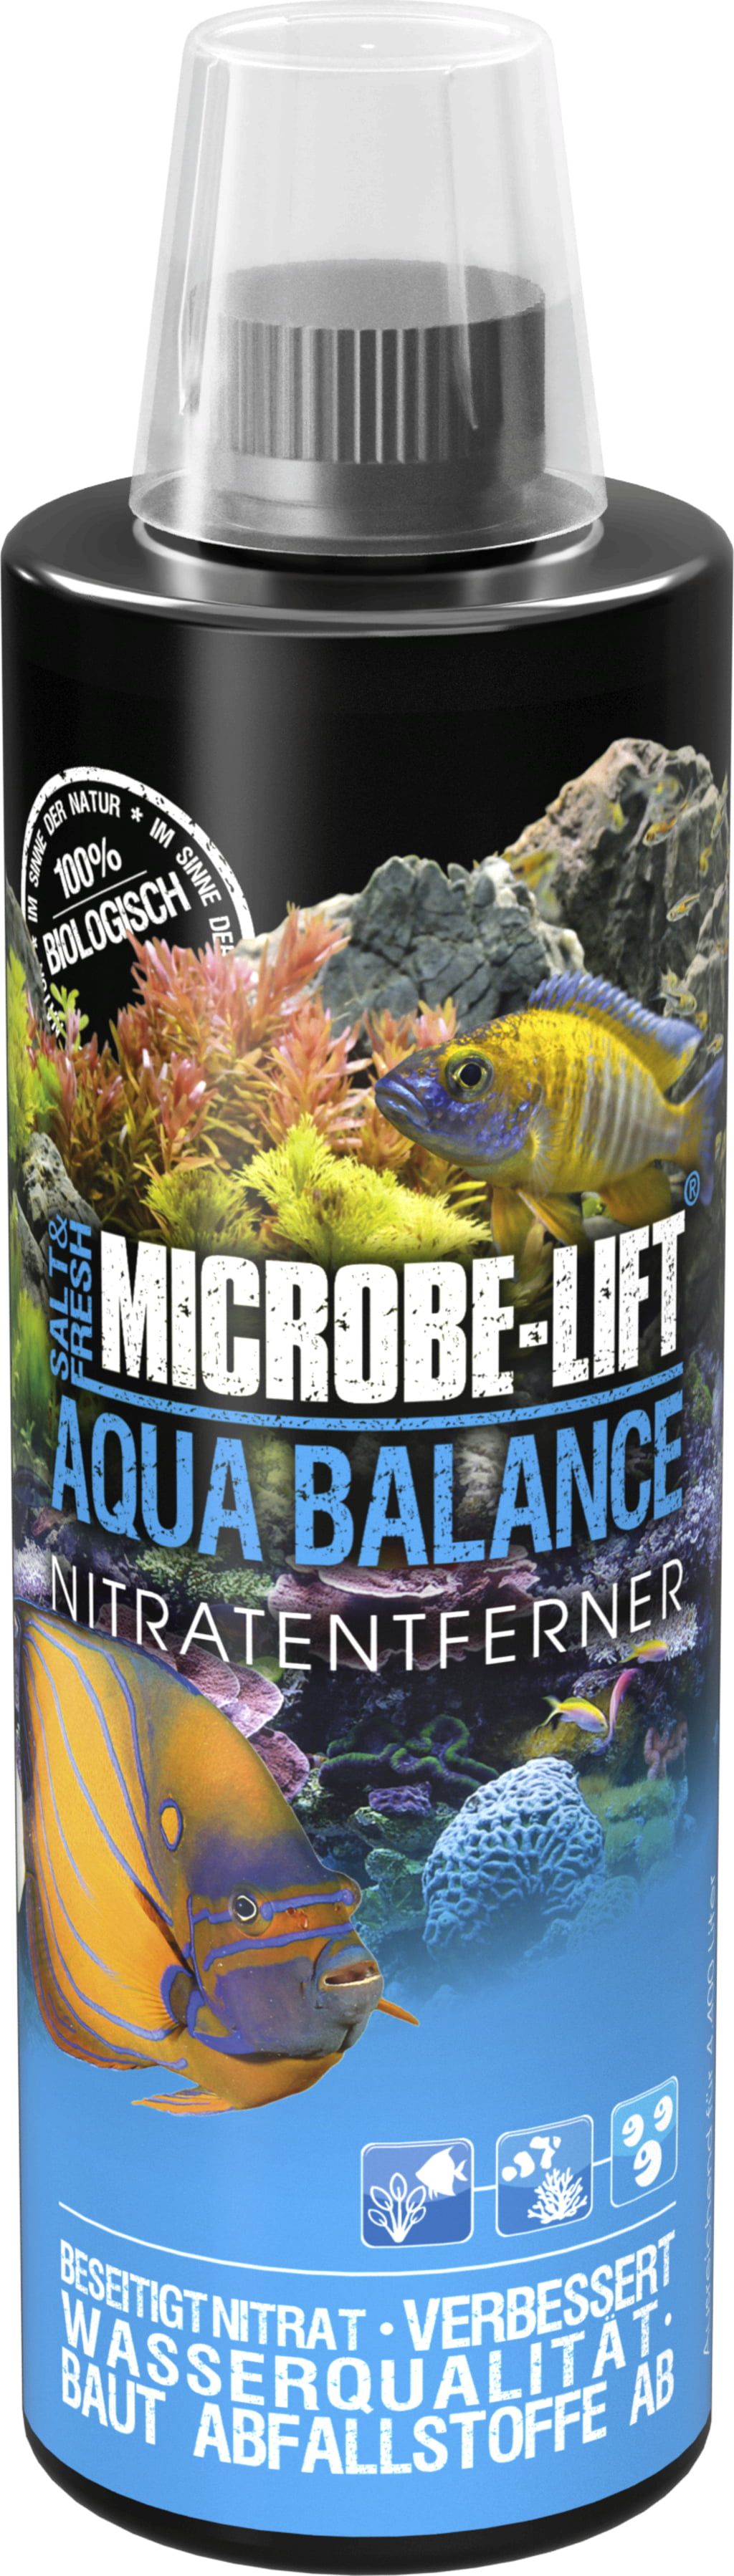 Microbe-Lift Aqua Balance - Olibetta sklep internetowy Polska